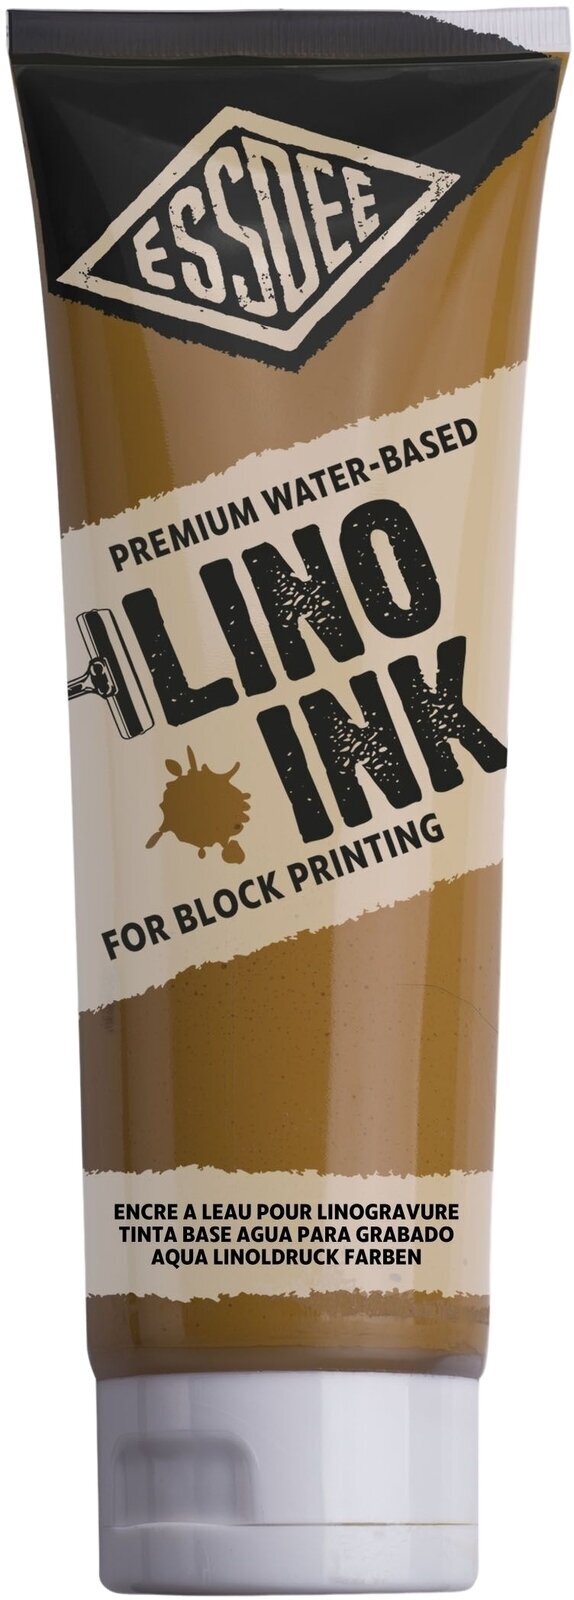 Farbe für Linolschnitt Essdee Block Printing Ink Farbe für Linolschnitt Yellow Ochre 300 ml